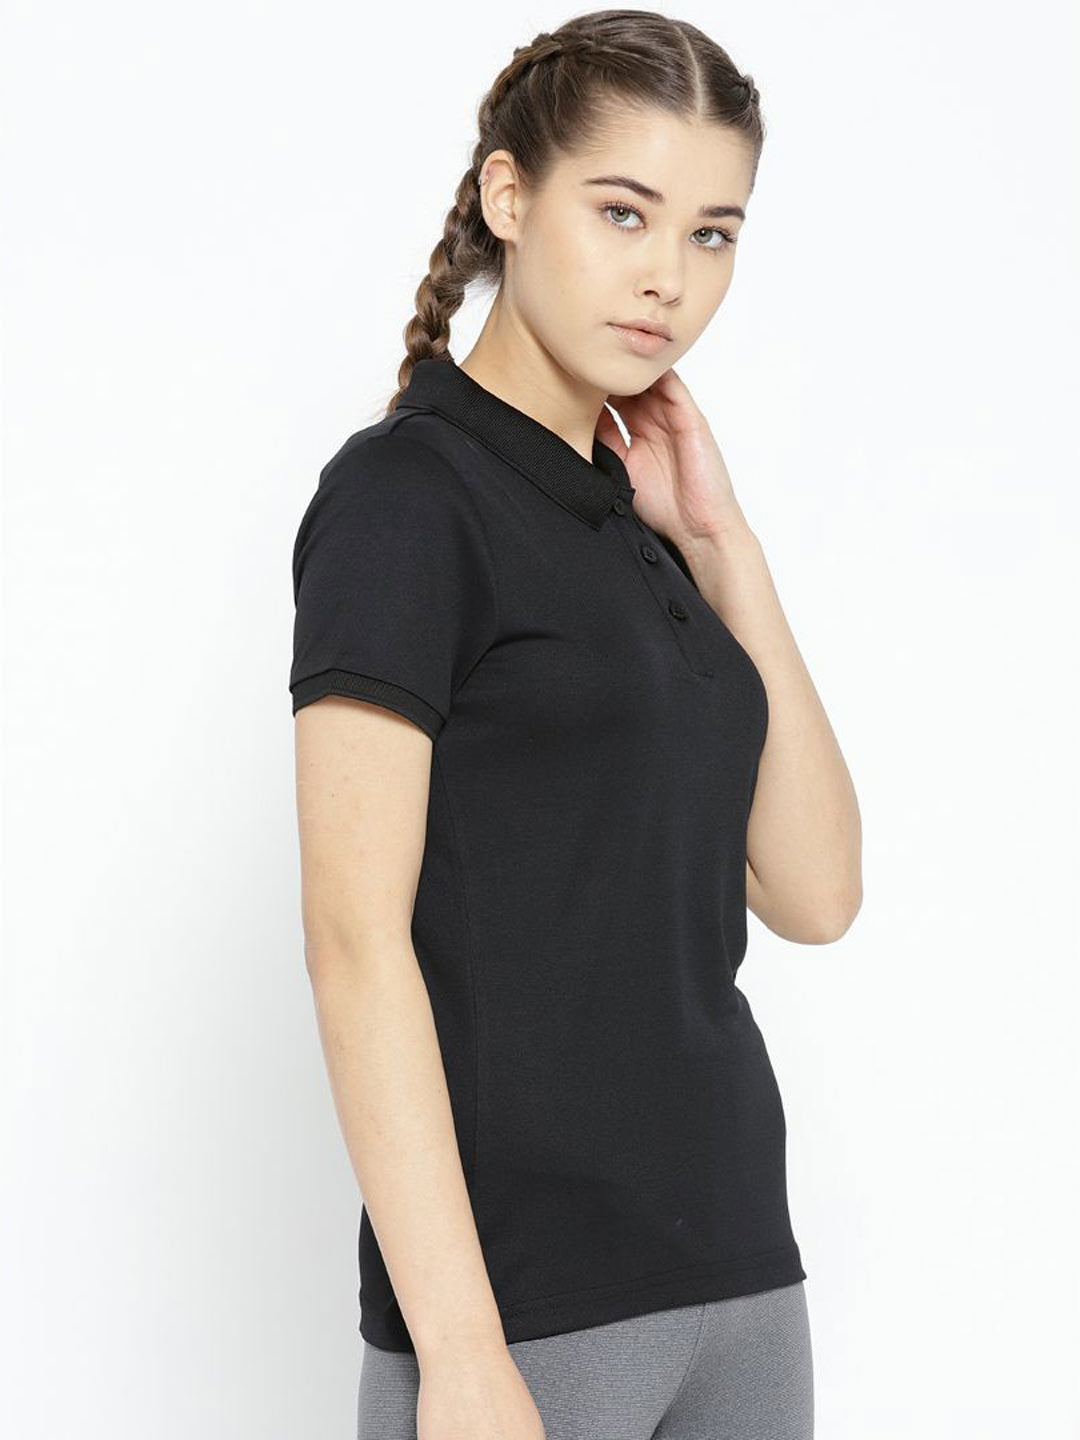 Alcis Women Black Solid Polo Collar T-shirt